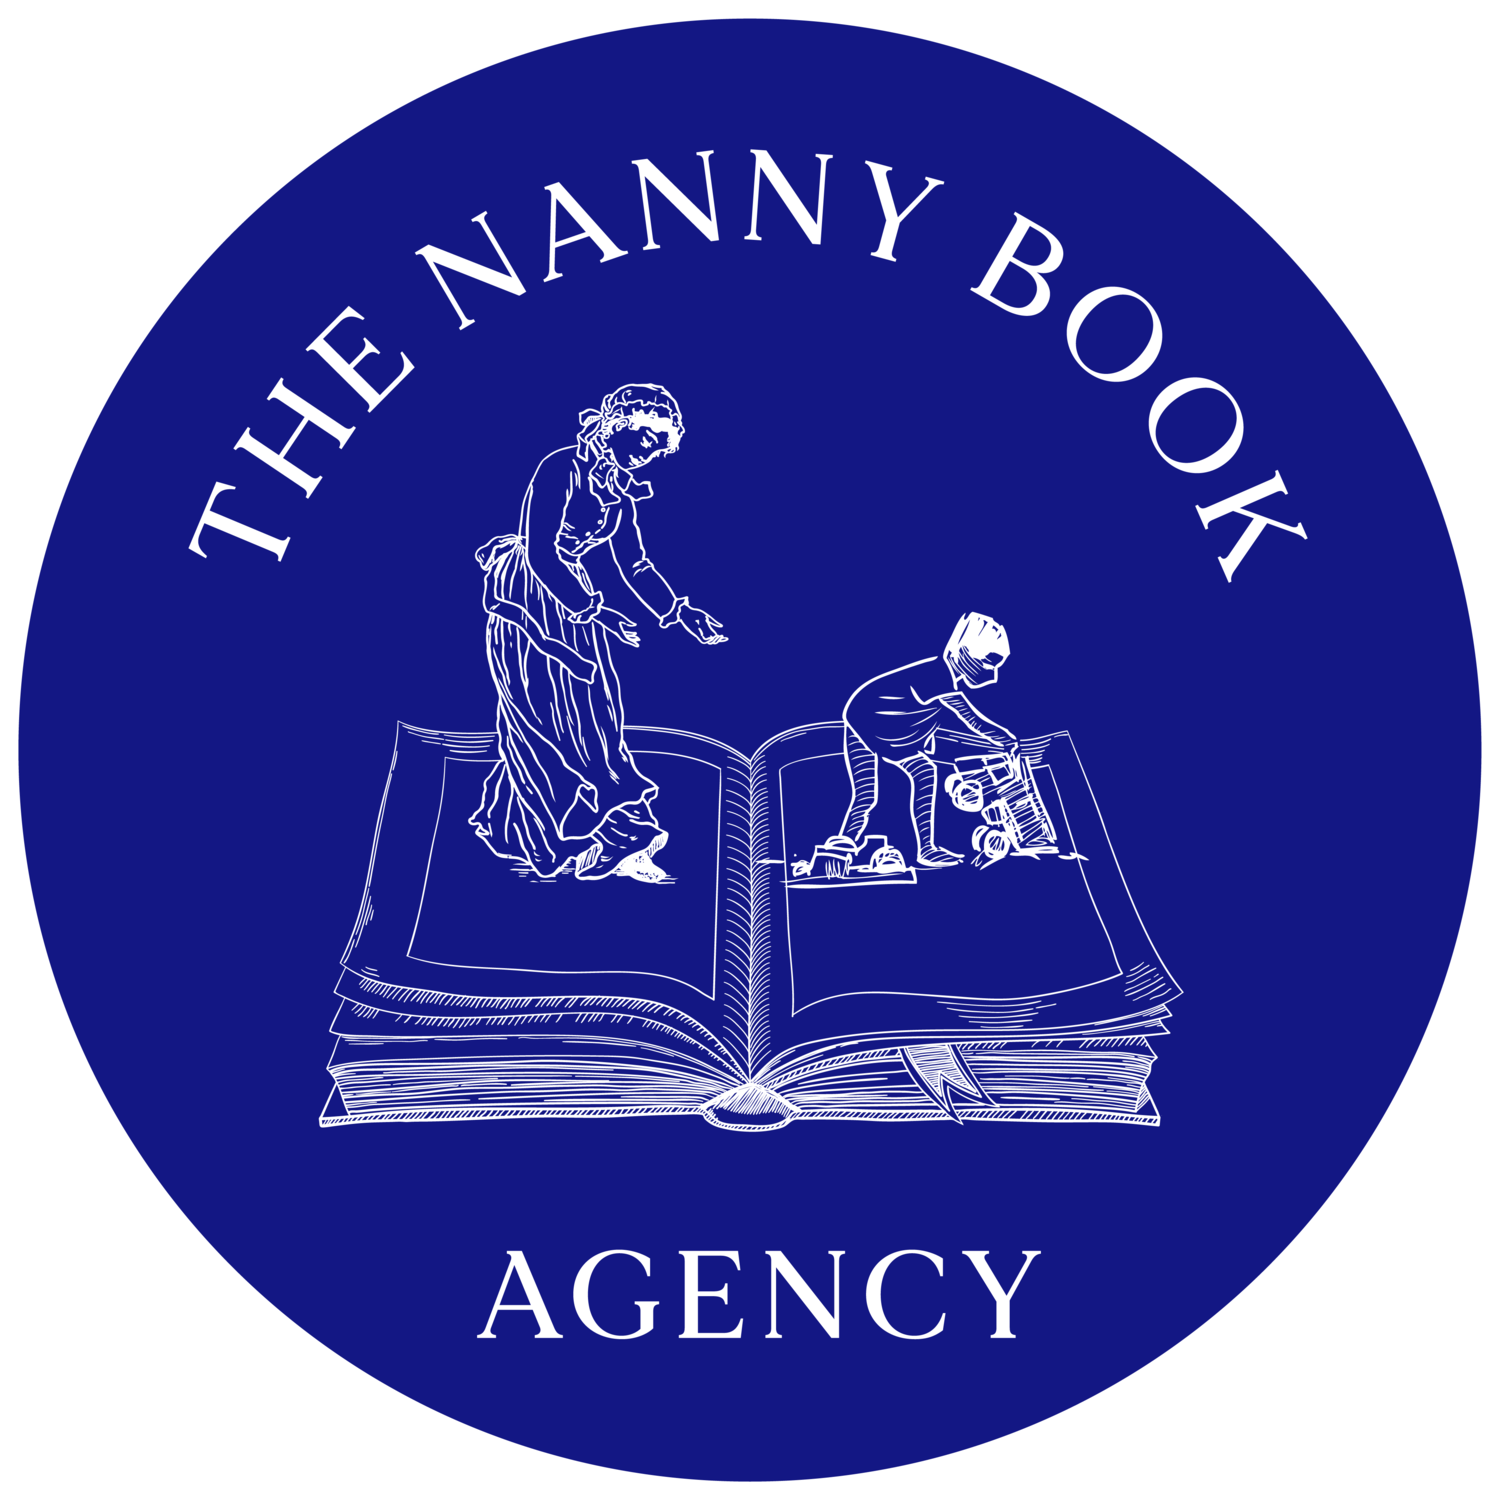 The Nanny Book Agency